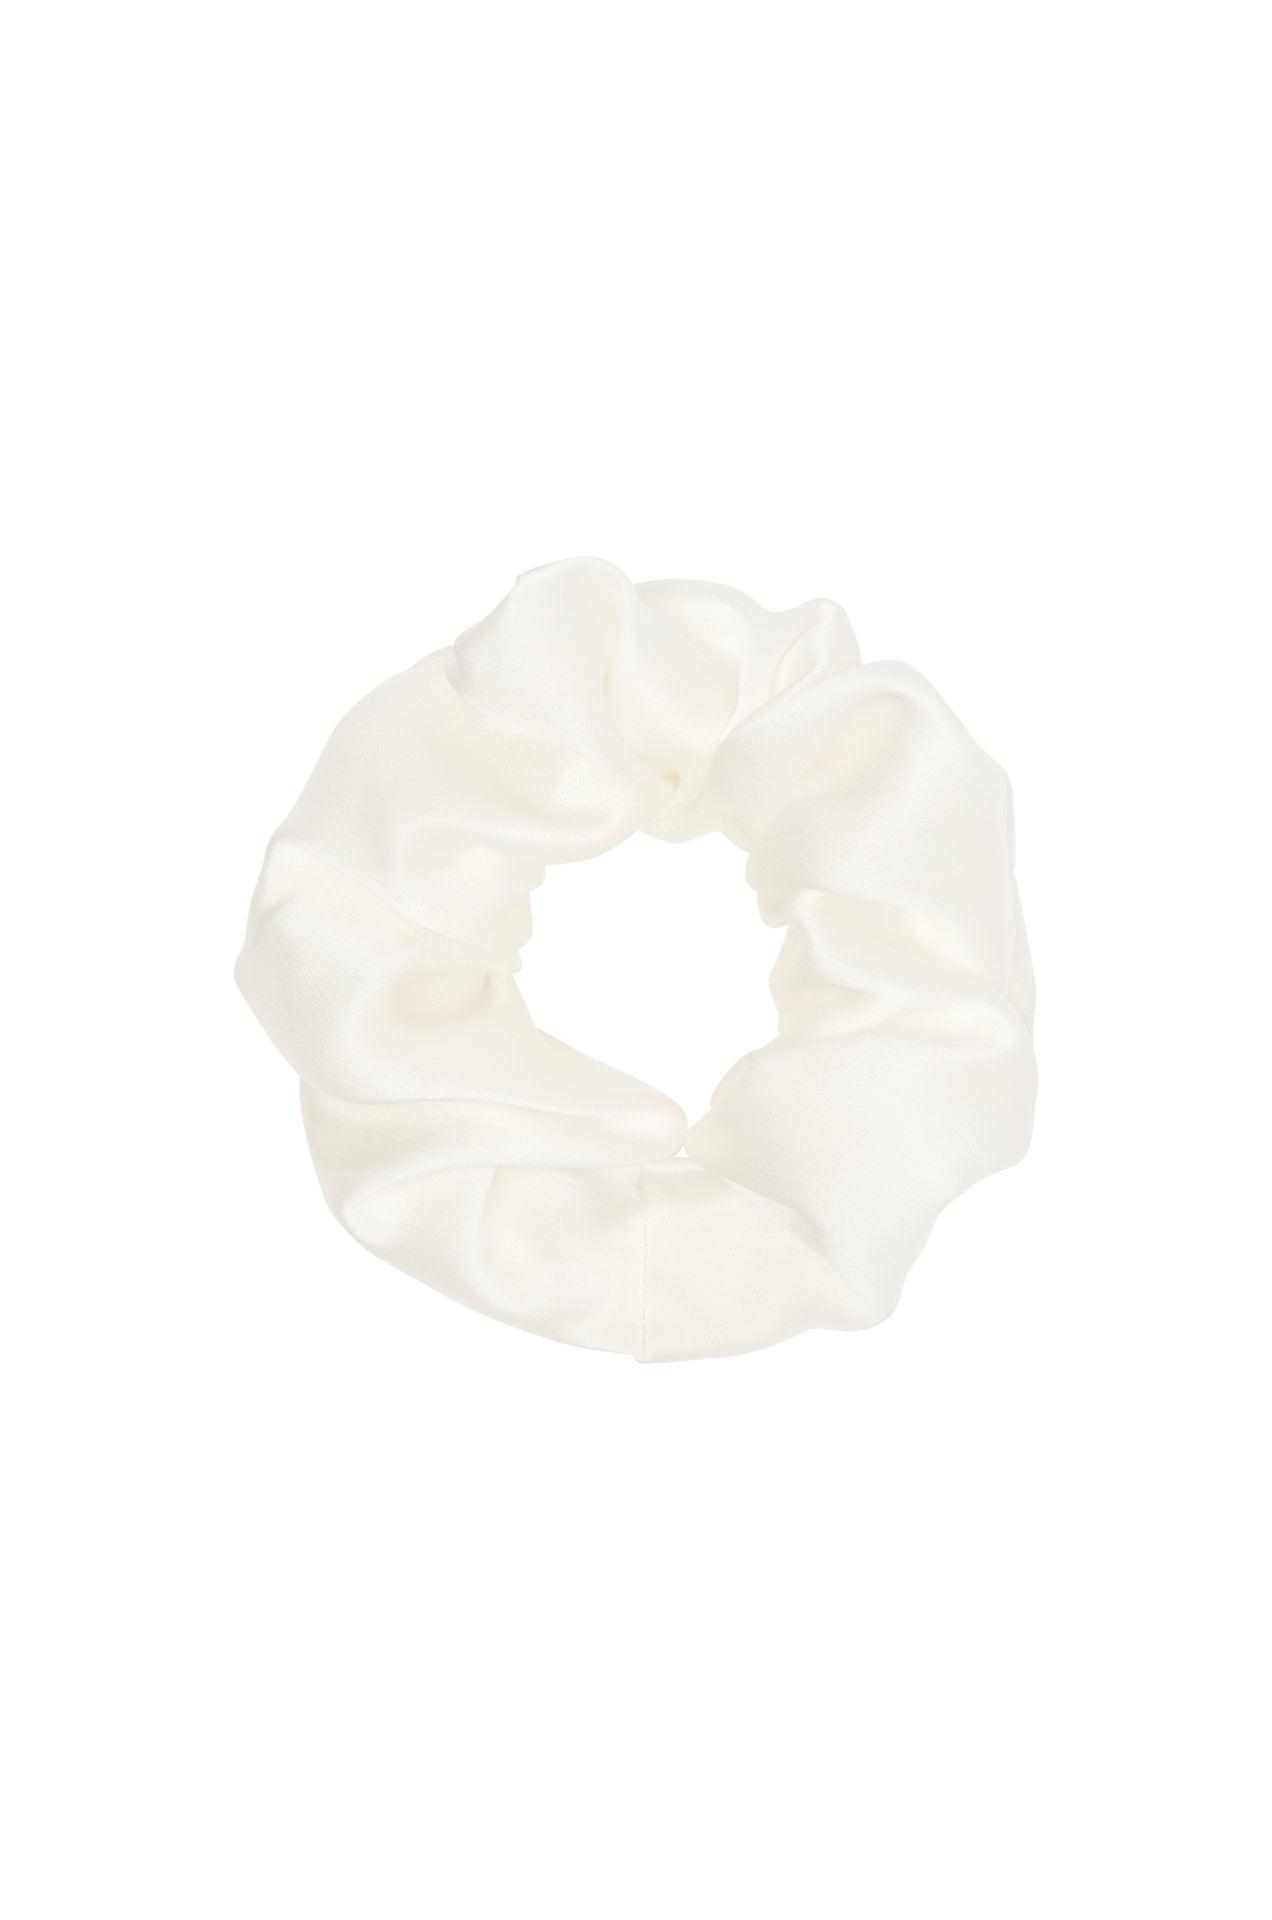 SAINT silk hair tie scrunchie in white cream pearl pure silk. made in Australia. 100% silk satin